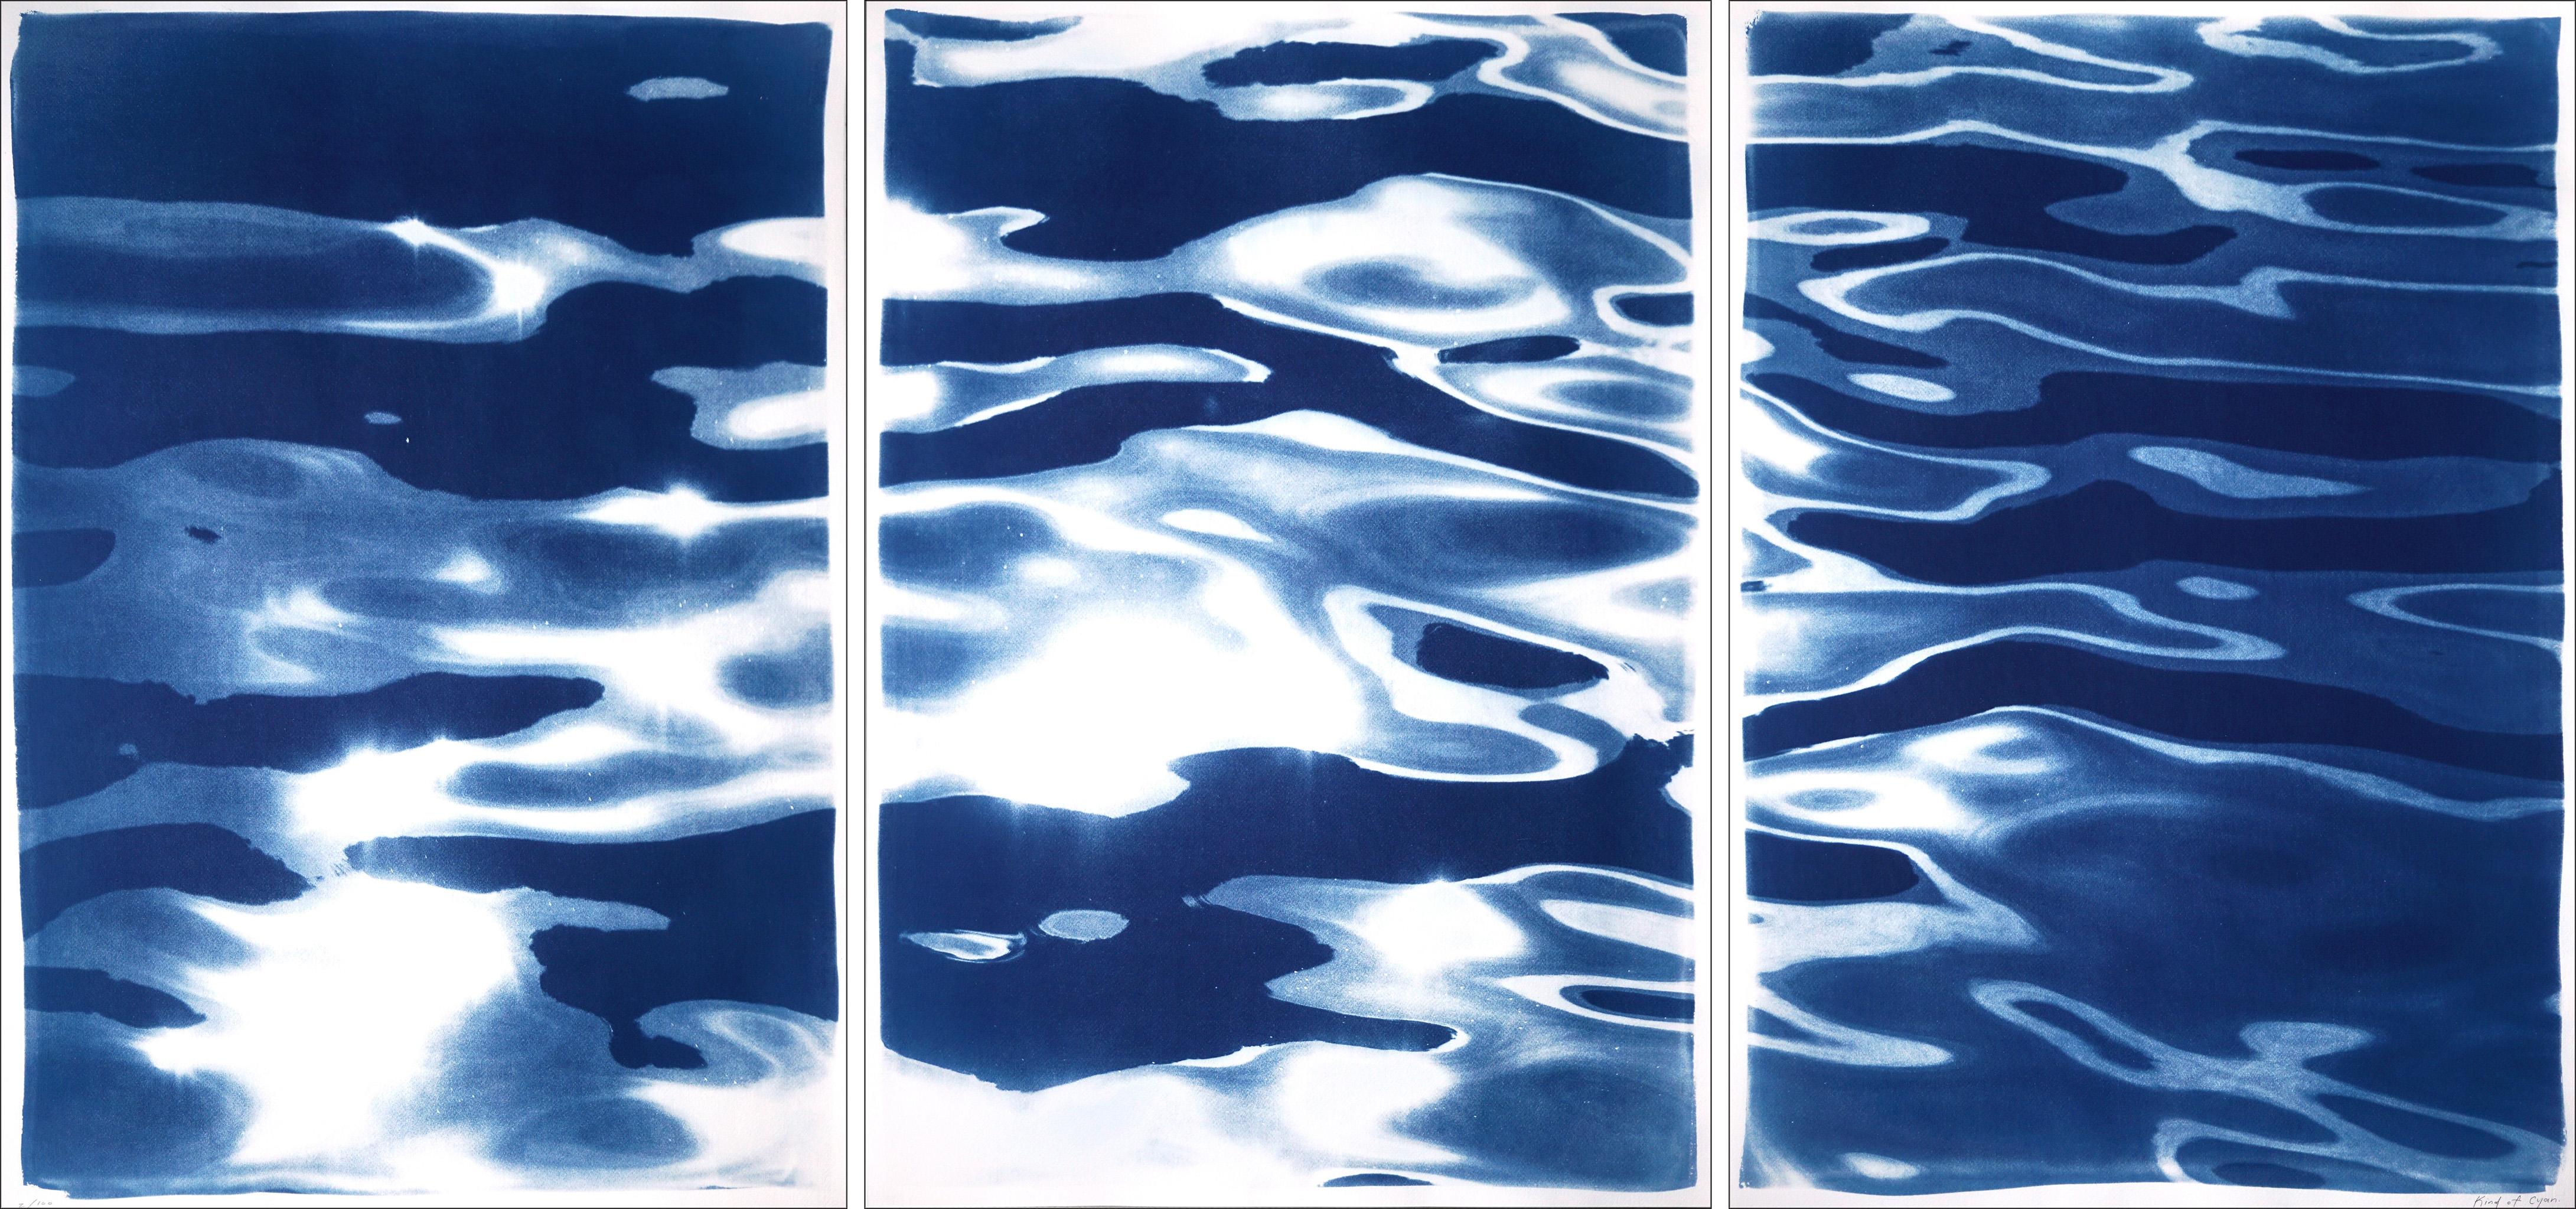 Kind of Cyan Landscape Print - Venice Seascape Triptych, Blue Lido Island Reflections, Contemporary Cyanotype